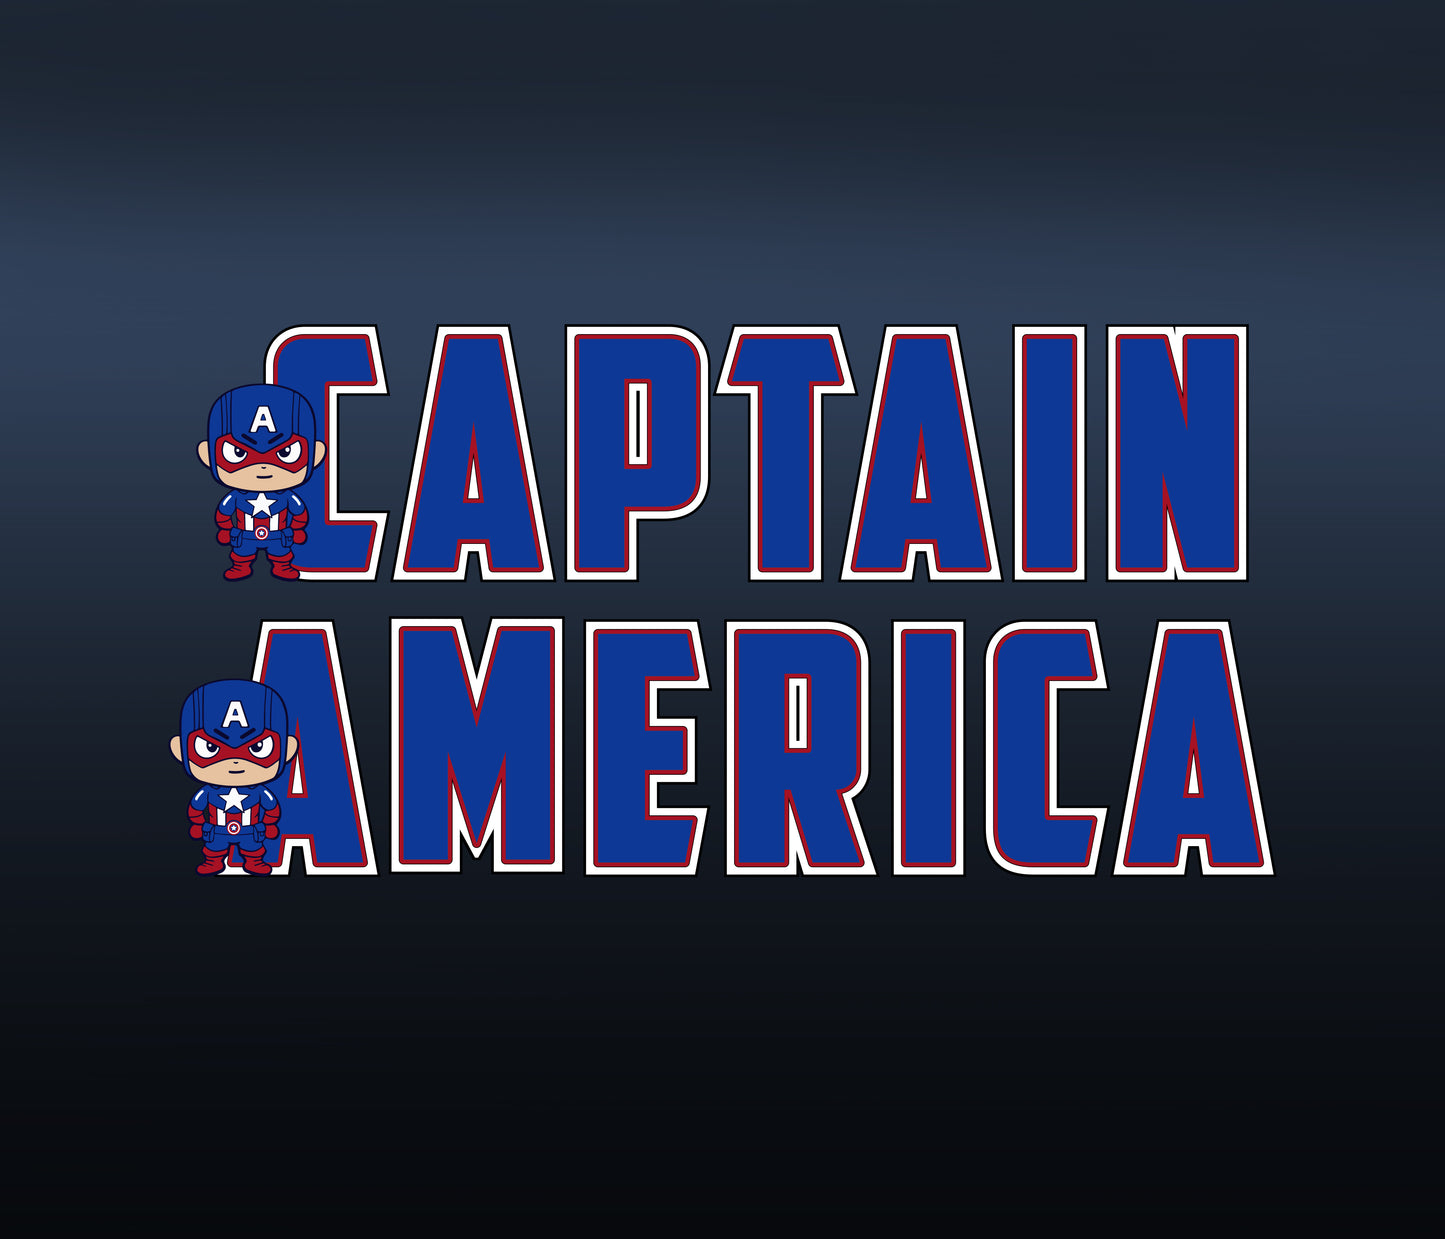 Captain America Textured Font